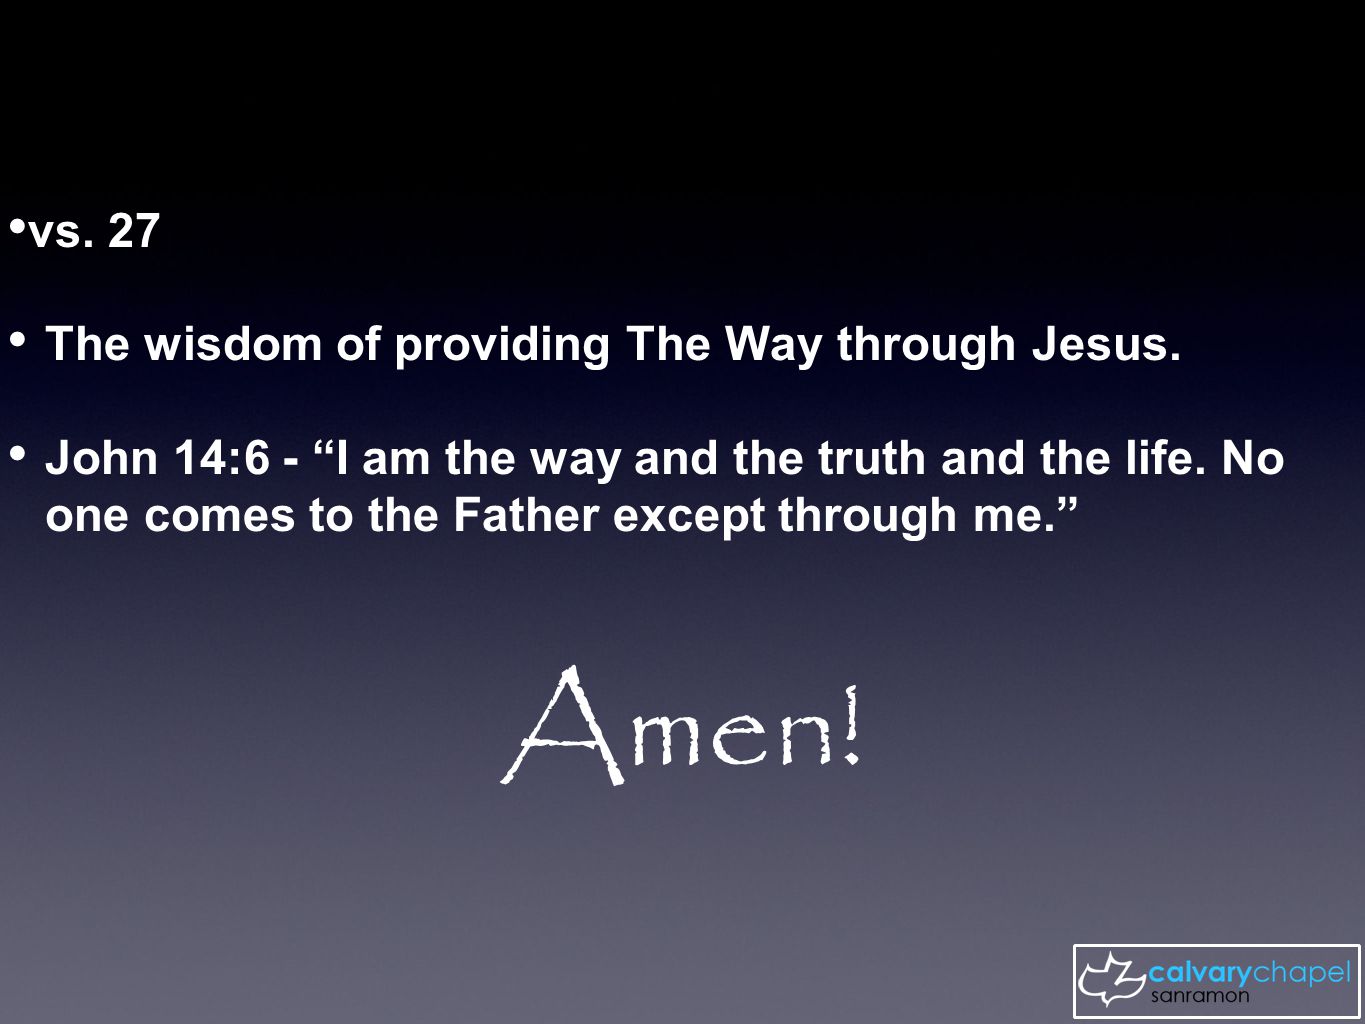 vs. 27 The wisdom of providing The Way through Jesus.